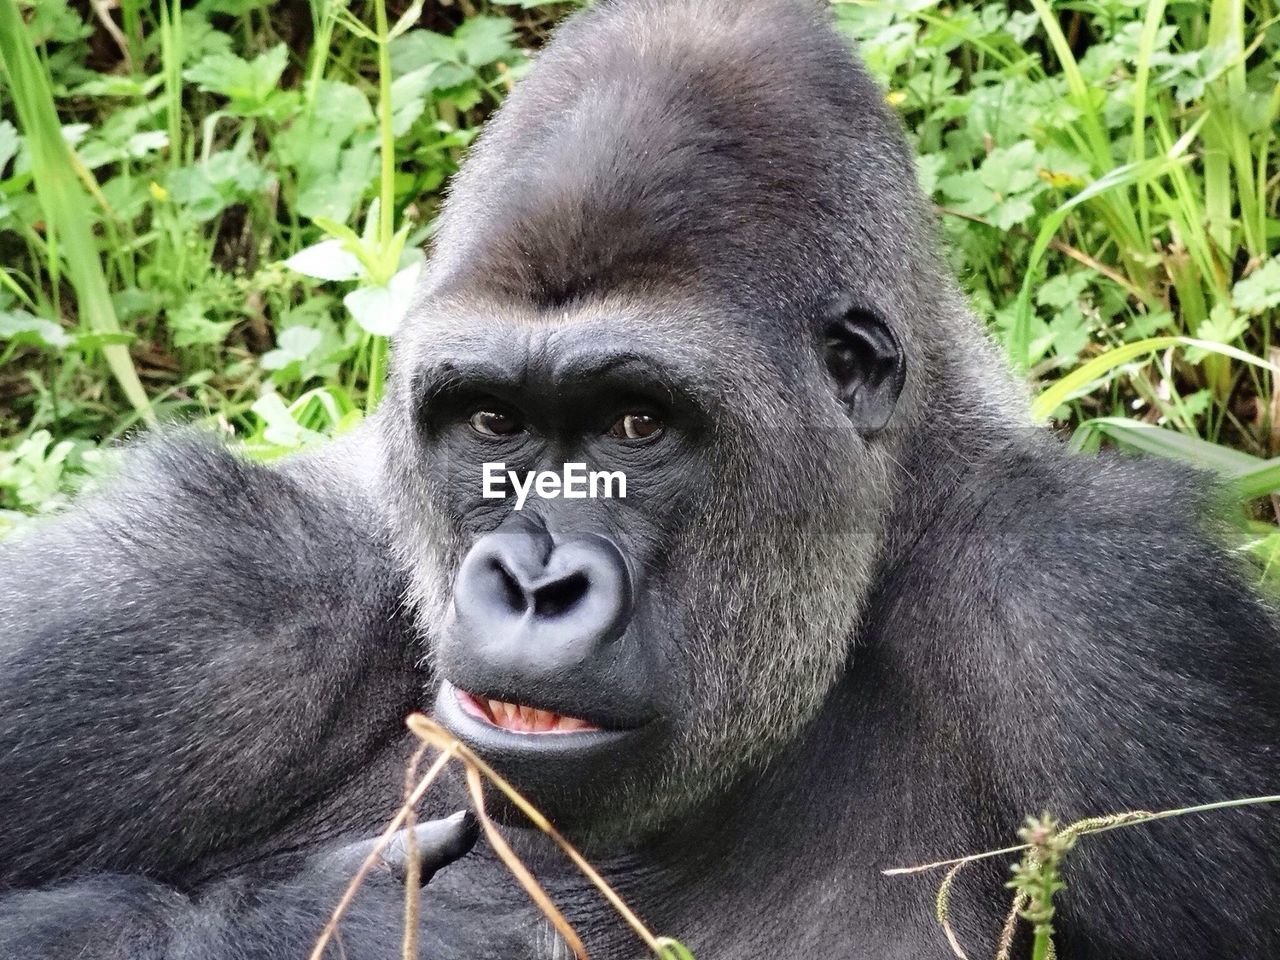 Portrait of gorilla in forest